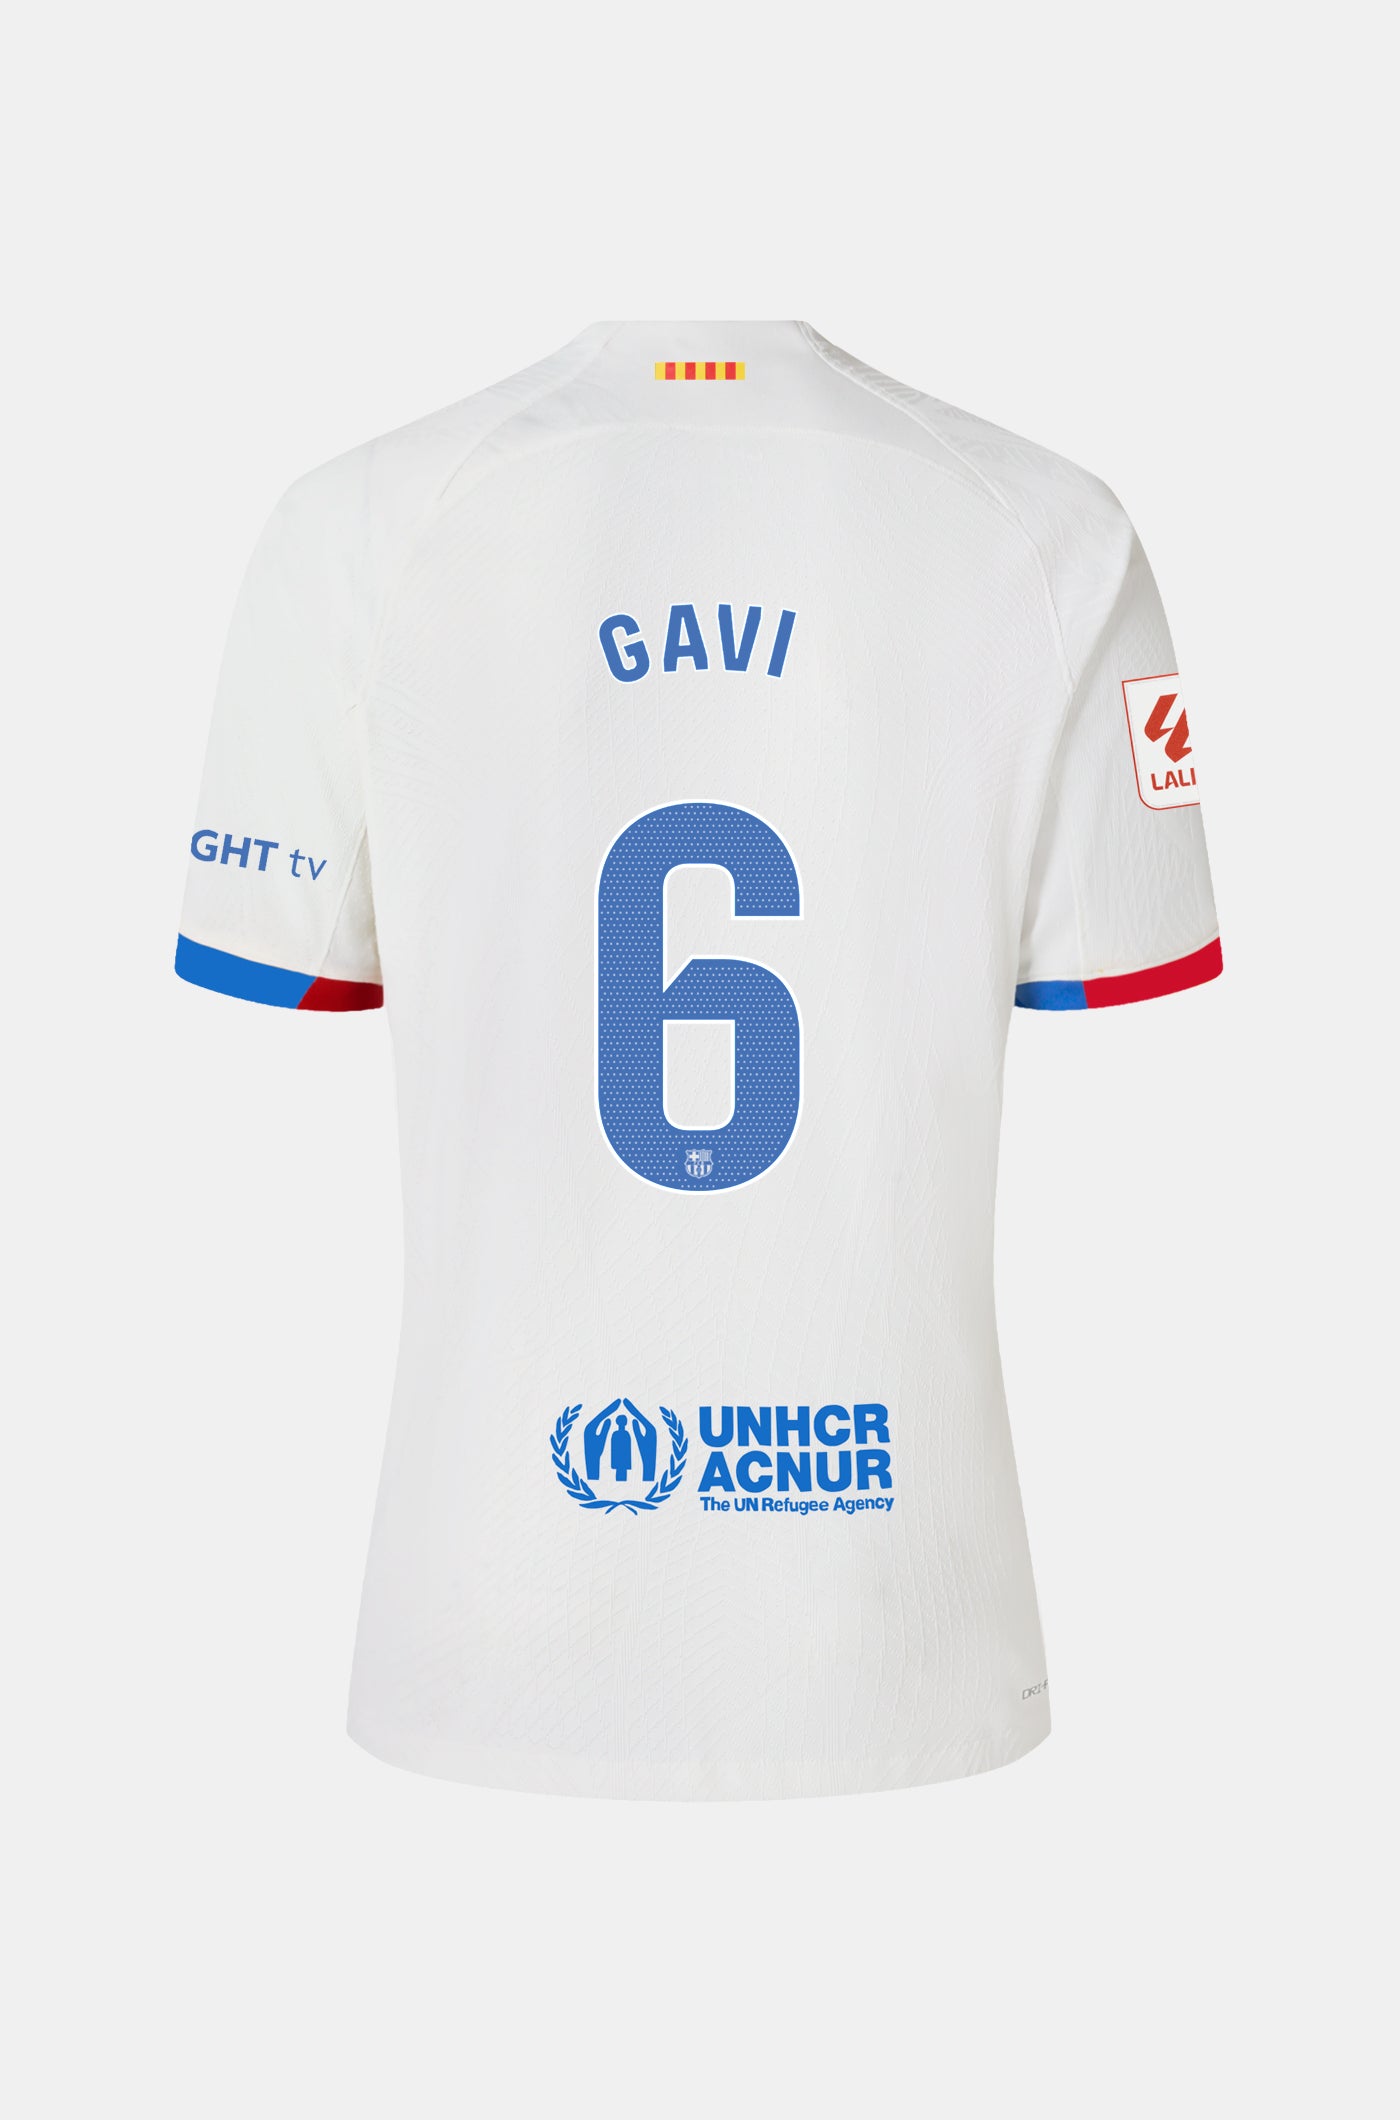 6. Gavi – Barça Official Store Spotify Camp Nou